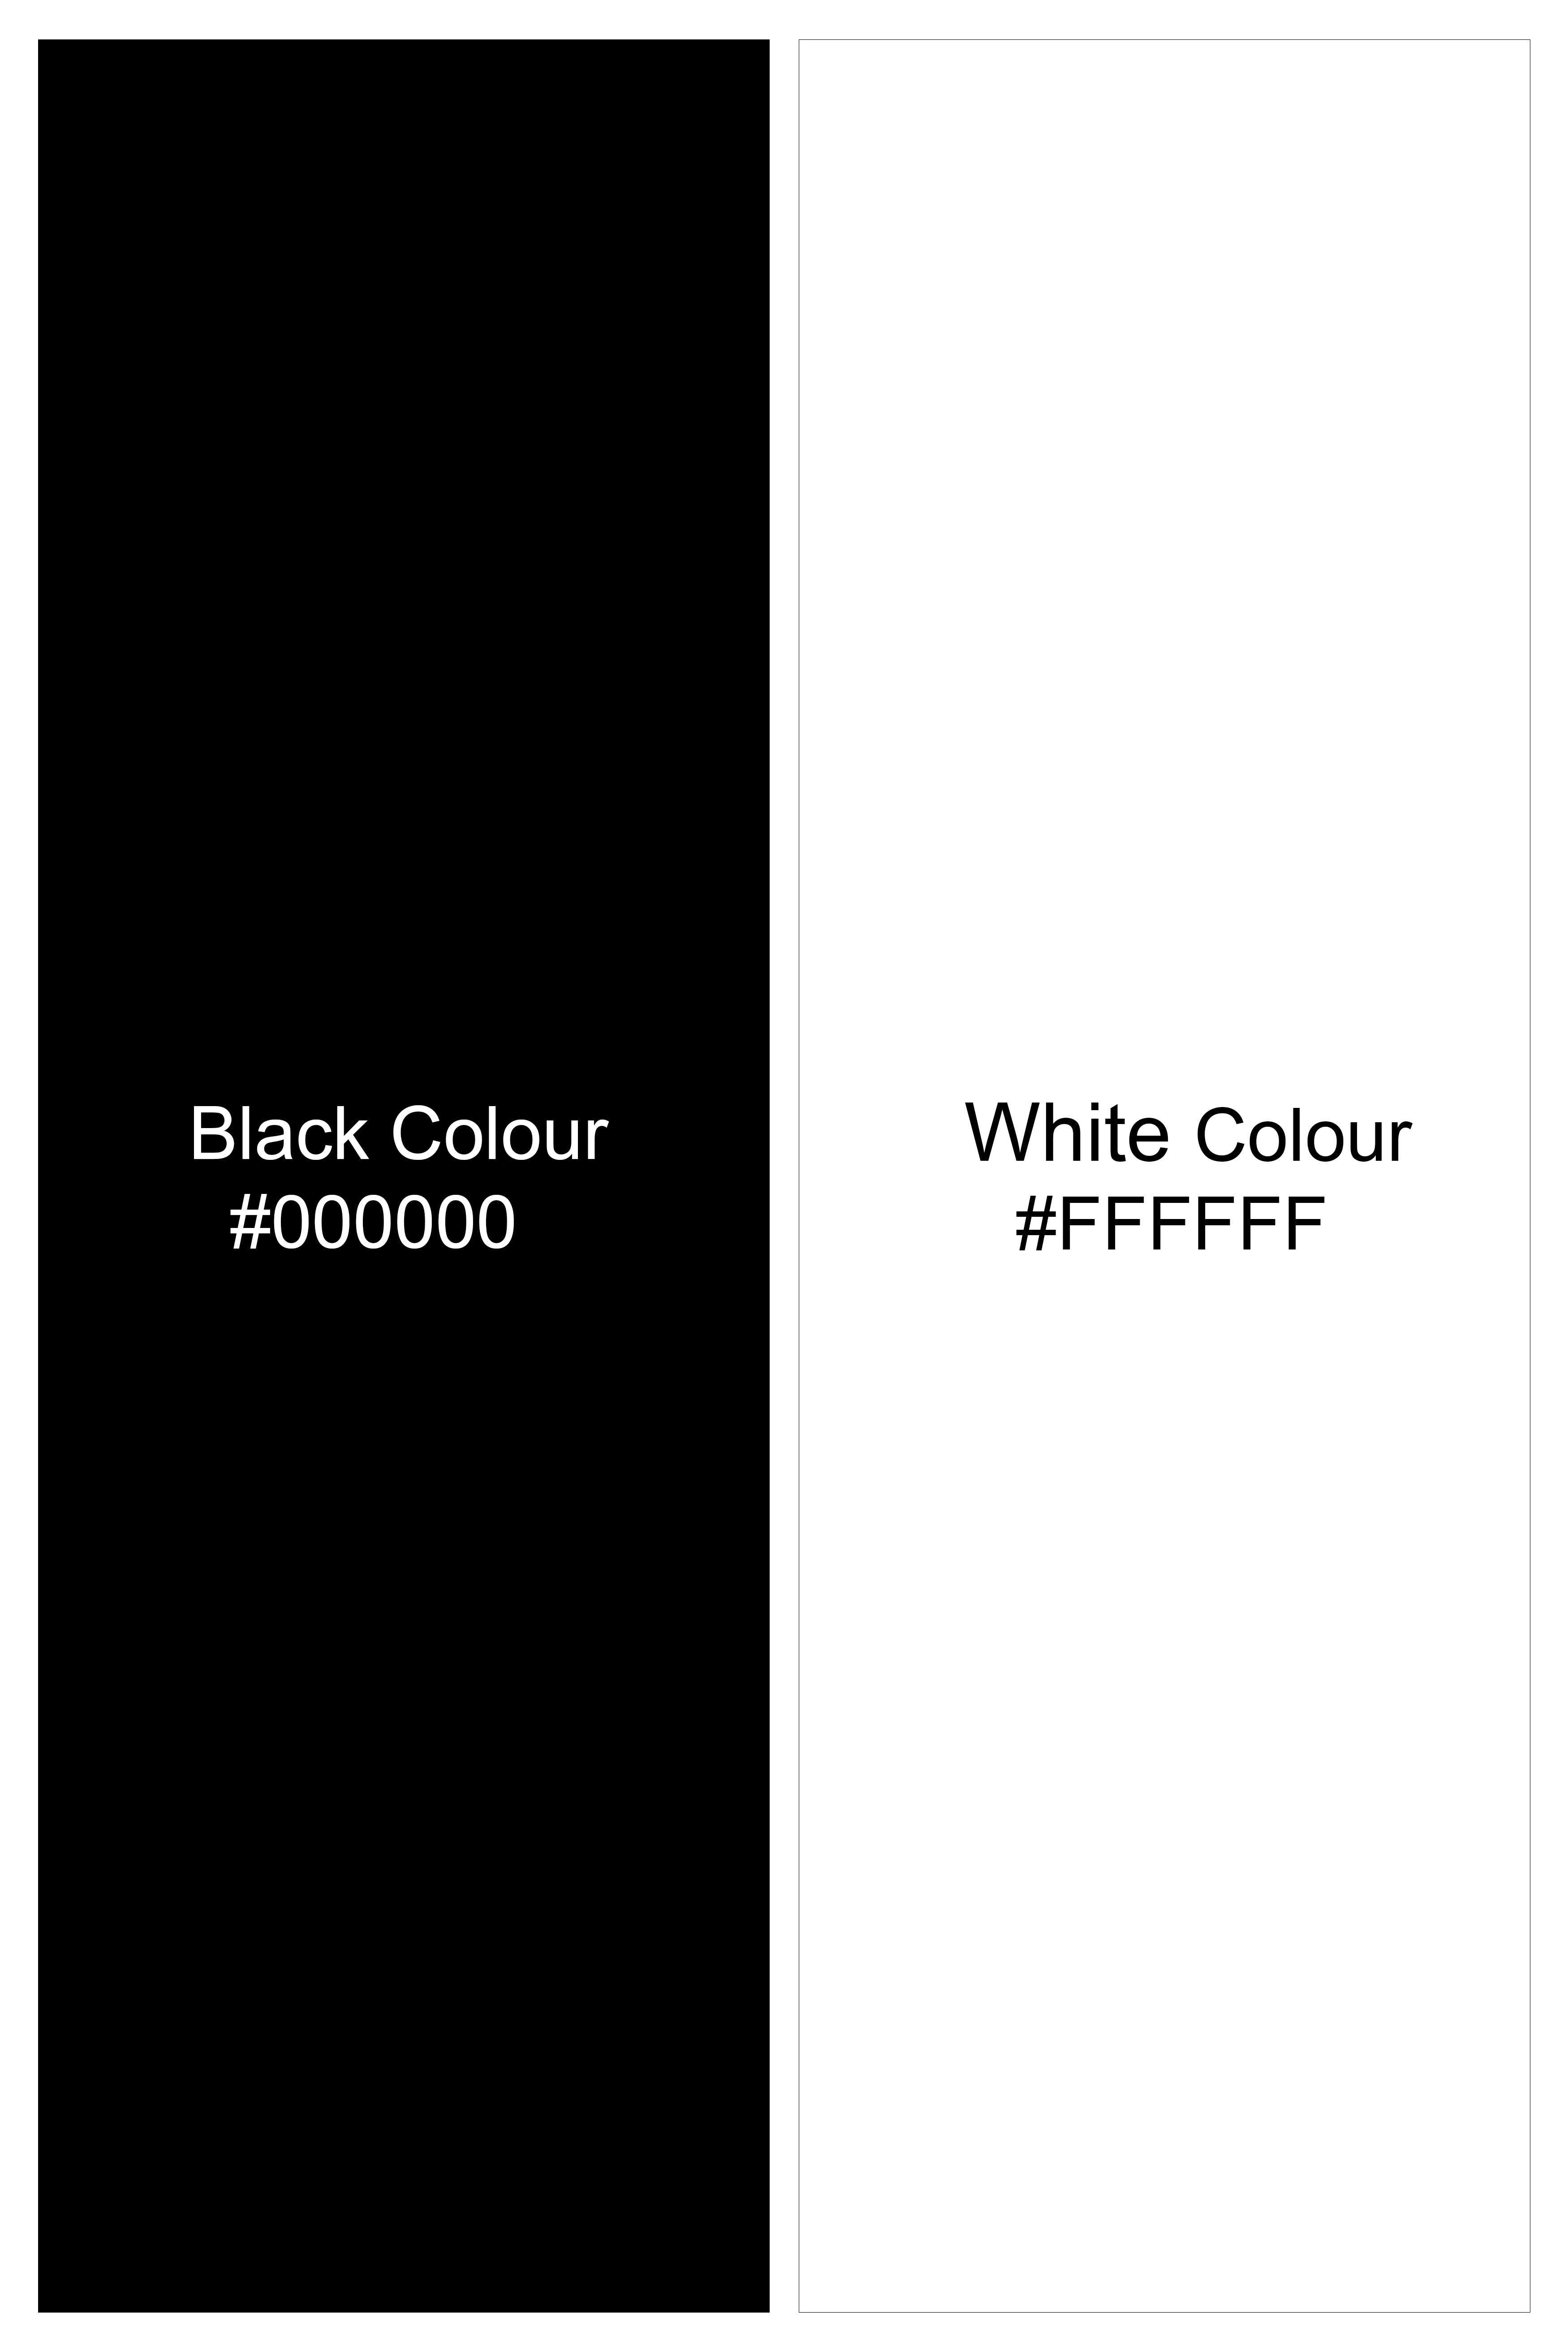 Jade Black and White Polka Dotted Premium Cotton Shirt 10789-FP-BLK-P695-38, 10789-FP-BLK-P695-H-38, 10789-FP-BLK-P695-39, 10789-FP-BLK-P695-H-39, 10789-FP-BLK-P695-40, 10789-FP-BLK-P695-H-40, 10789-FP-BLK-P695-42, 10789-FP-BLK-P695-H-42, 10789-FP-BLK-P695-44, 10789-FP-BLK-P695-H-44, 10789-FP-BLK-P695-46, 10789-FP-BLK-P695-H-46, 10789-FP-BLK-P695-48, 10789-FP-BLK-P695-H-48, 10789-FP-BLK-P695-50, 10789-FP-BLK-P695-H-50, 10789-FP-BLK-P695-52, 10789-FP-BLK-P695-H-52